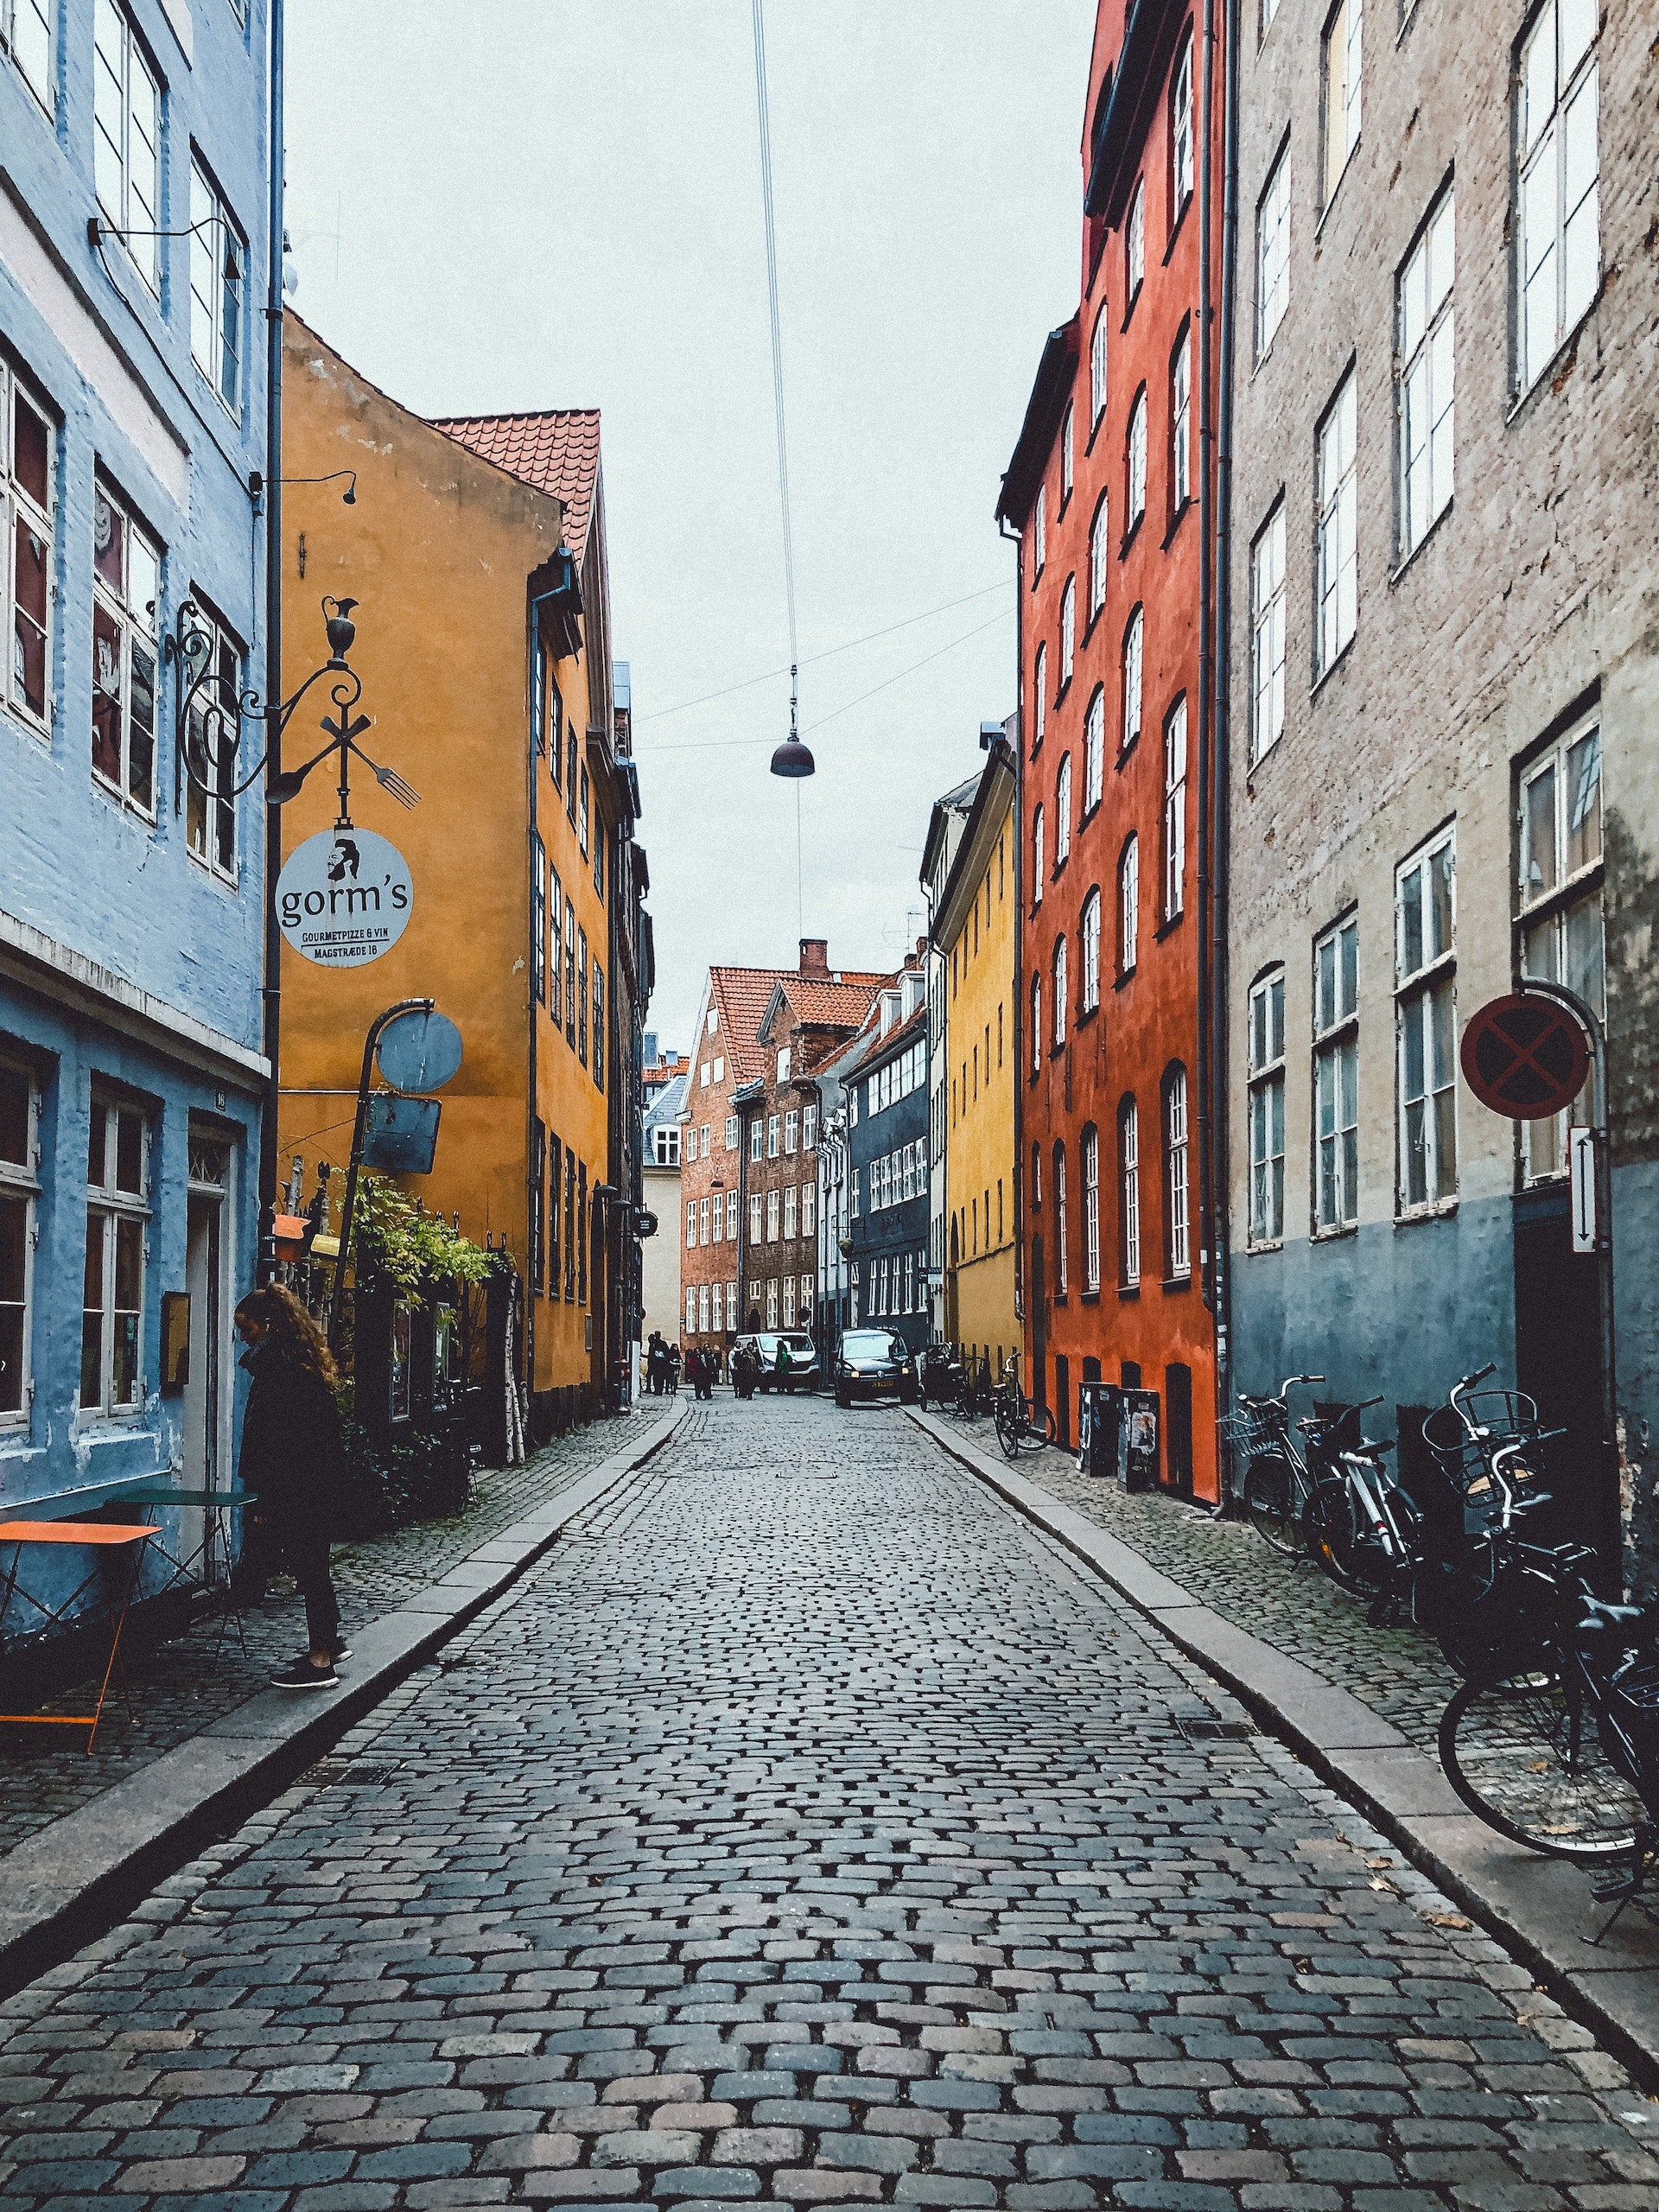 A cobblestone street with colorful buildings in Copenhagen, Denmark.